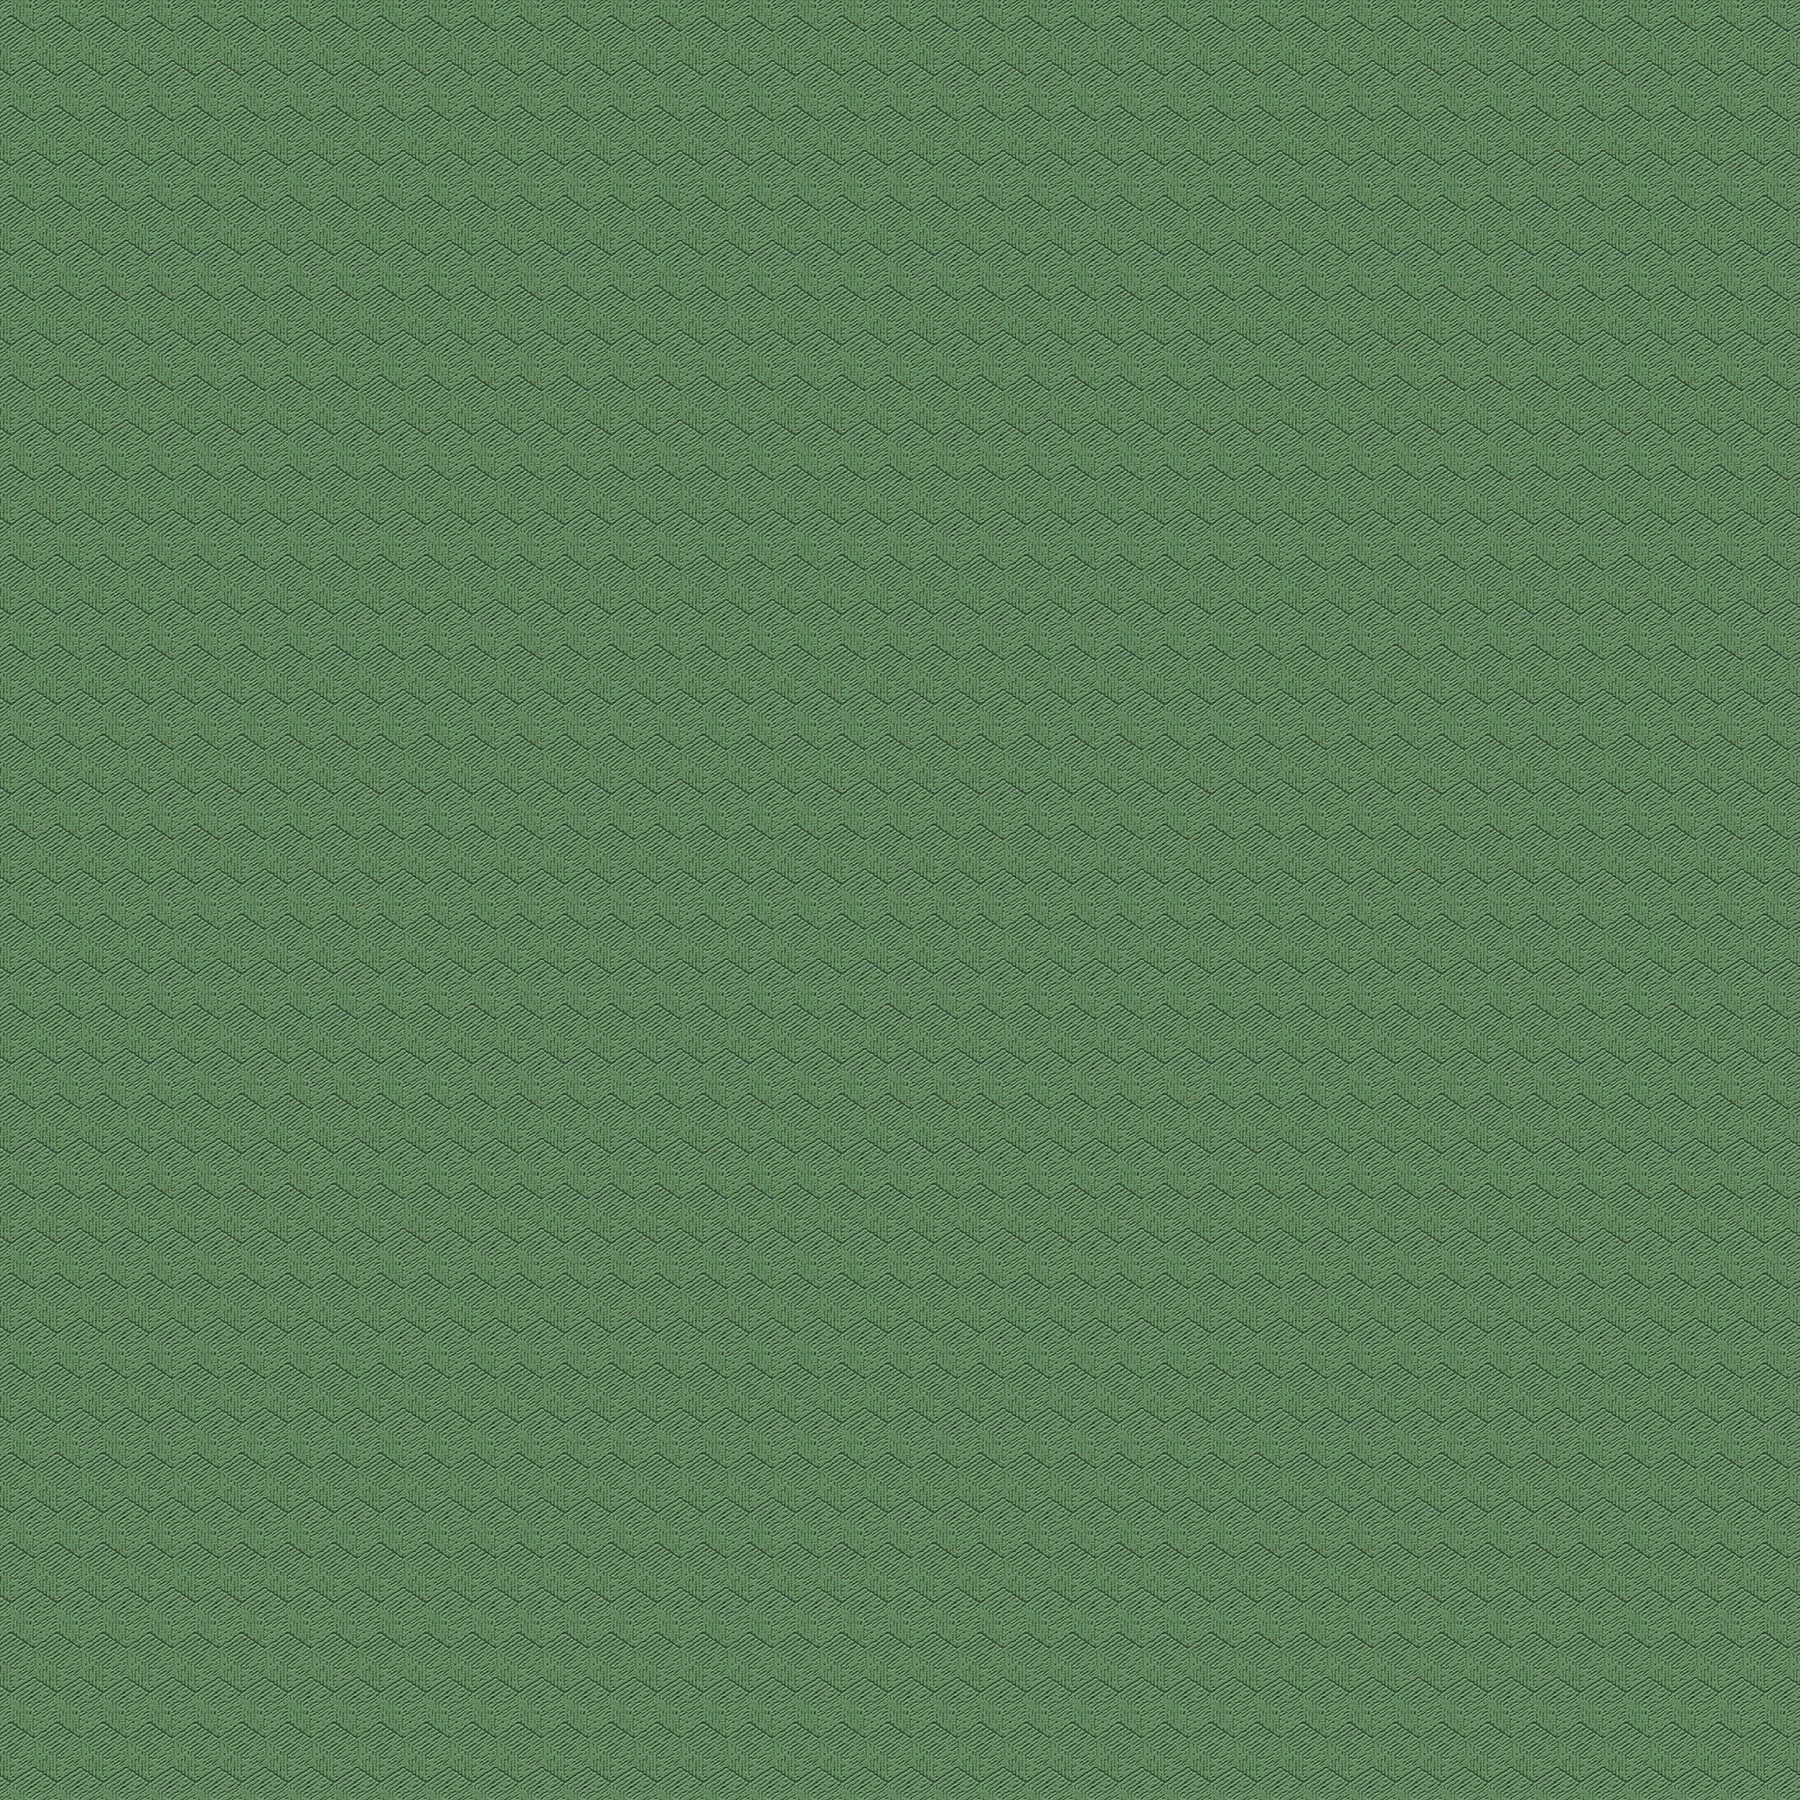         Wallpaper plain, textured with zigzag design - green
    